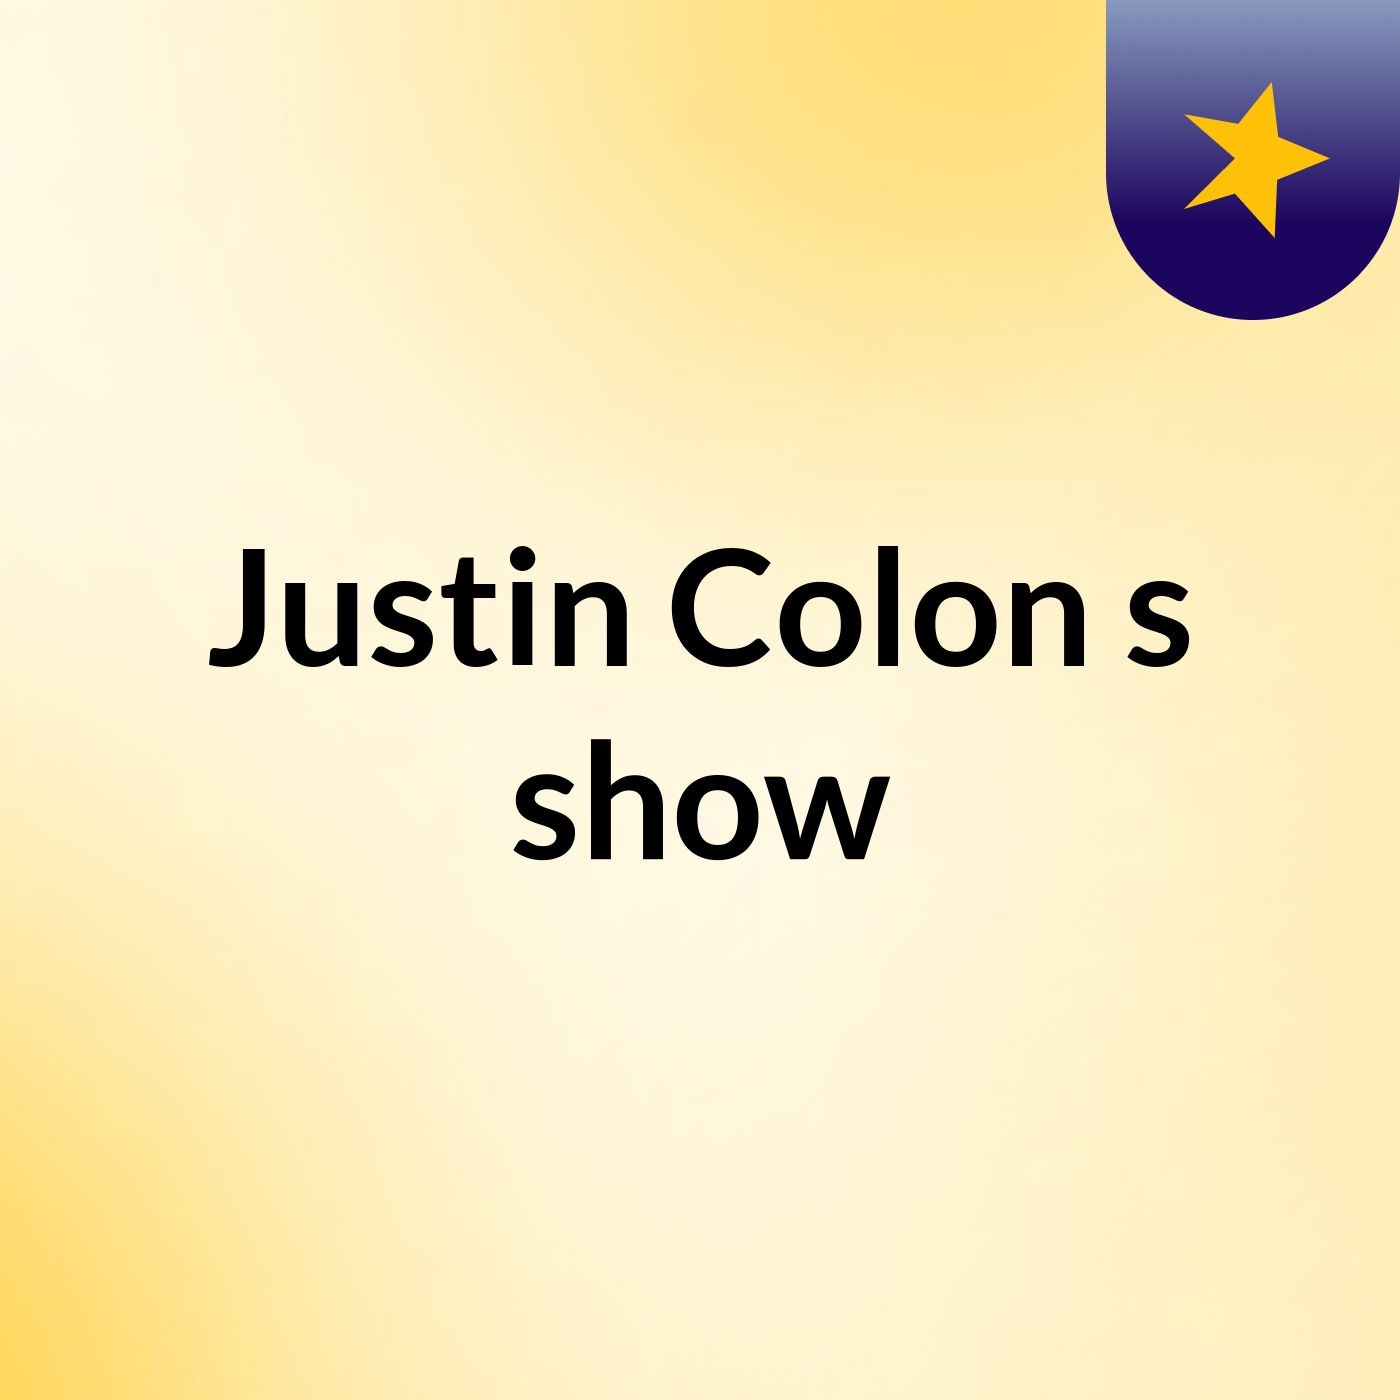 Episode 2 - Justin Colon's show